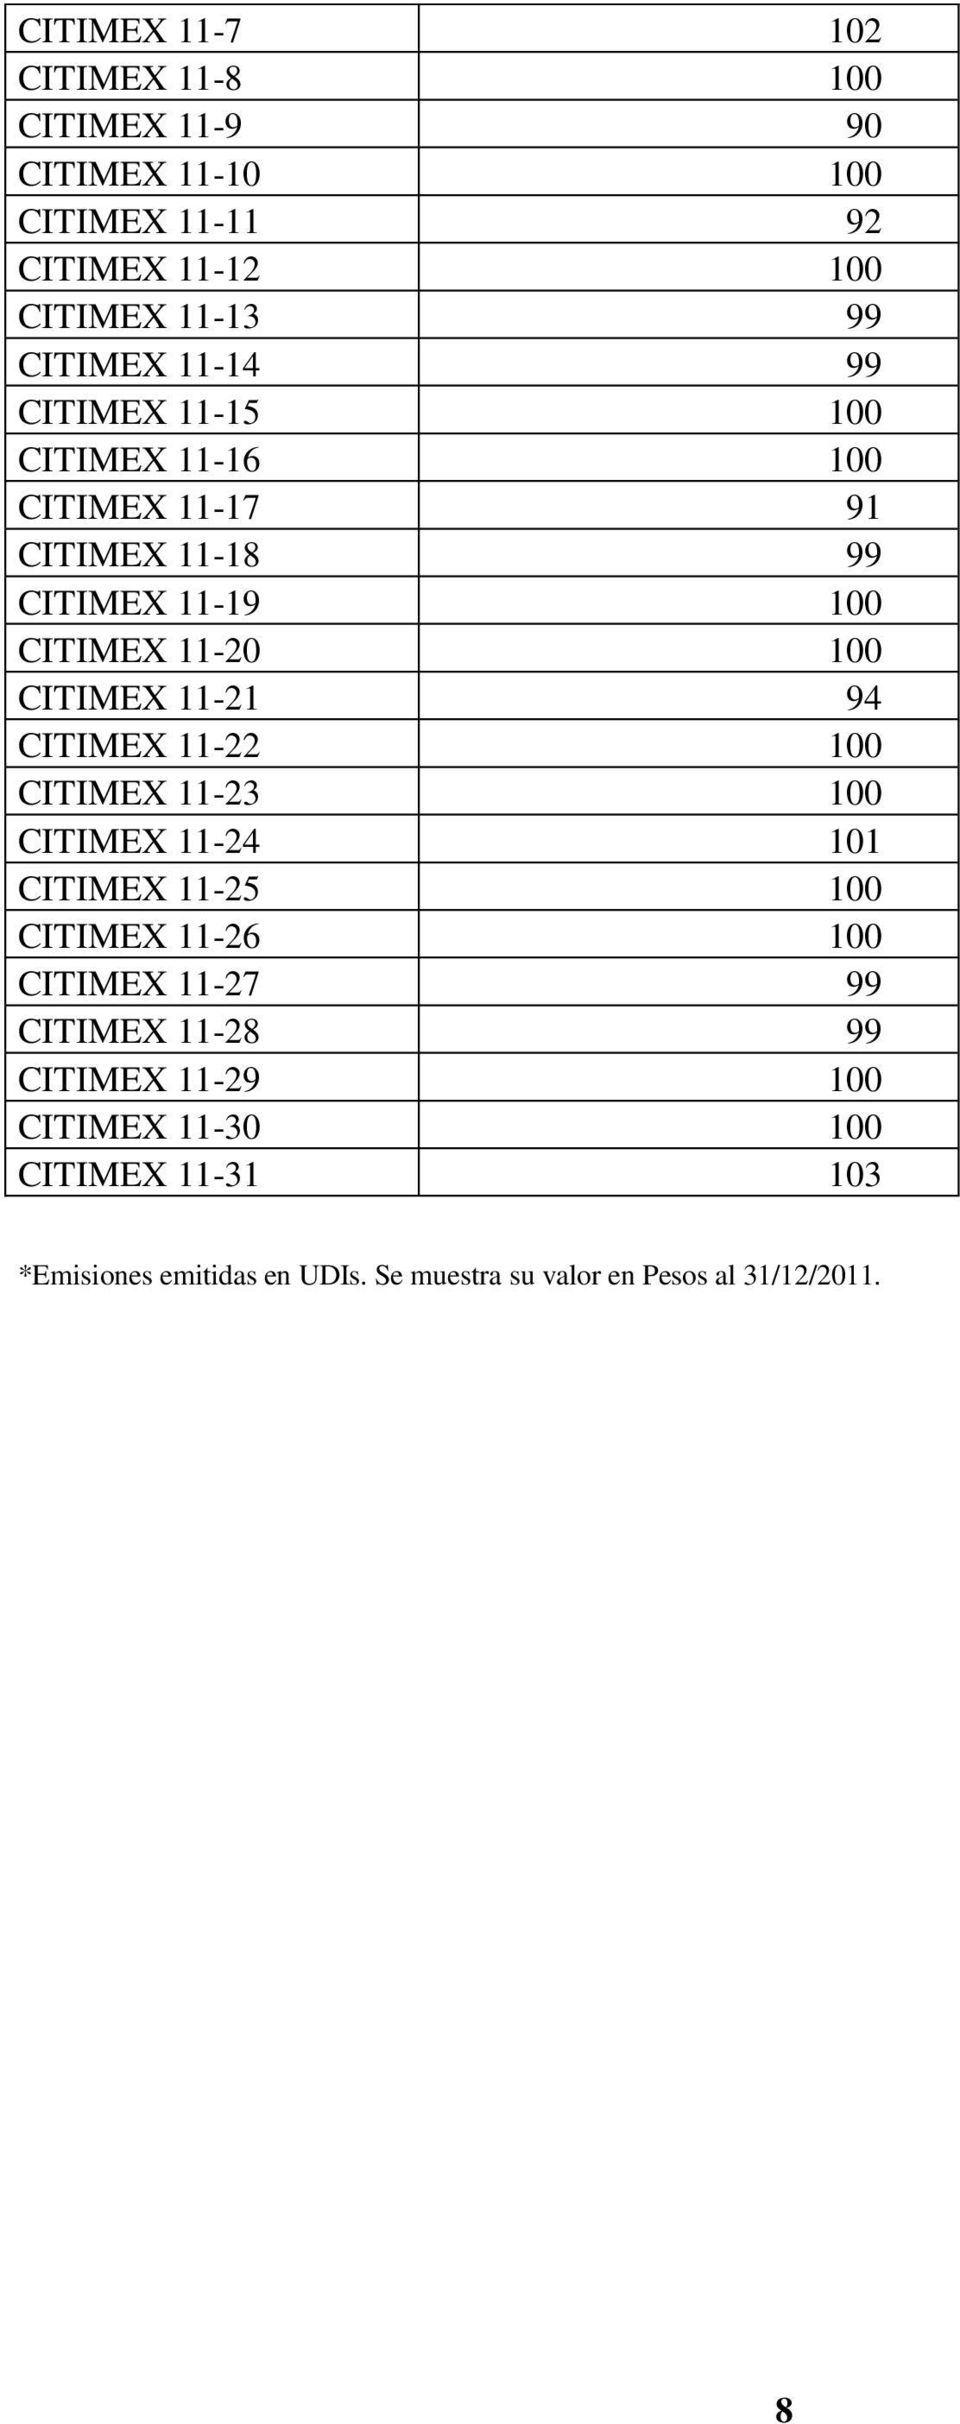 11-21 94 CITIMEX 11-22 100 CITIMEX 11-23 100 CITIMEX 11-24 101 CITIMEX 11-25 100 CITIMEX 11-26 100 CITIMEX 11-27 99 CITIMEX